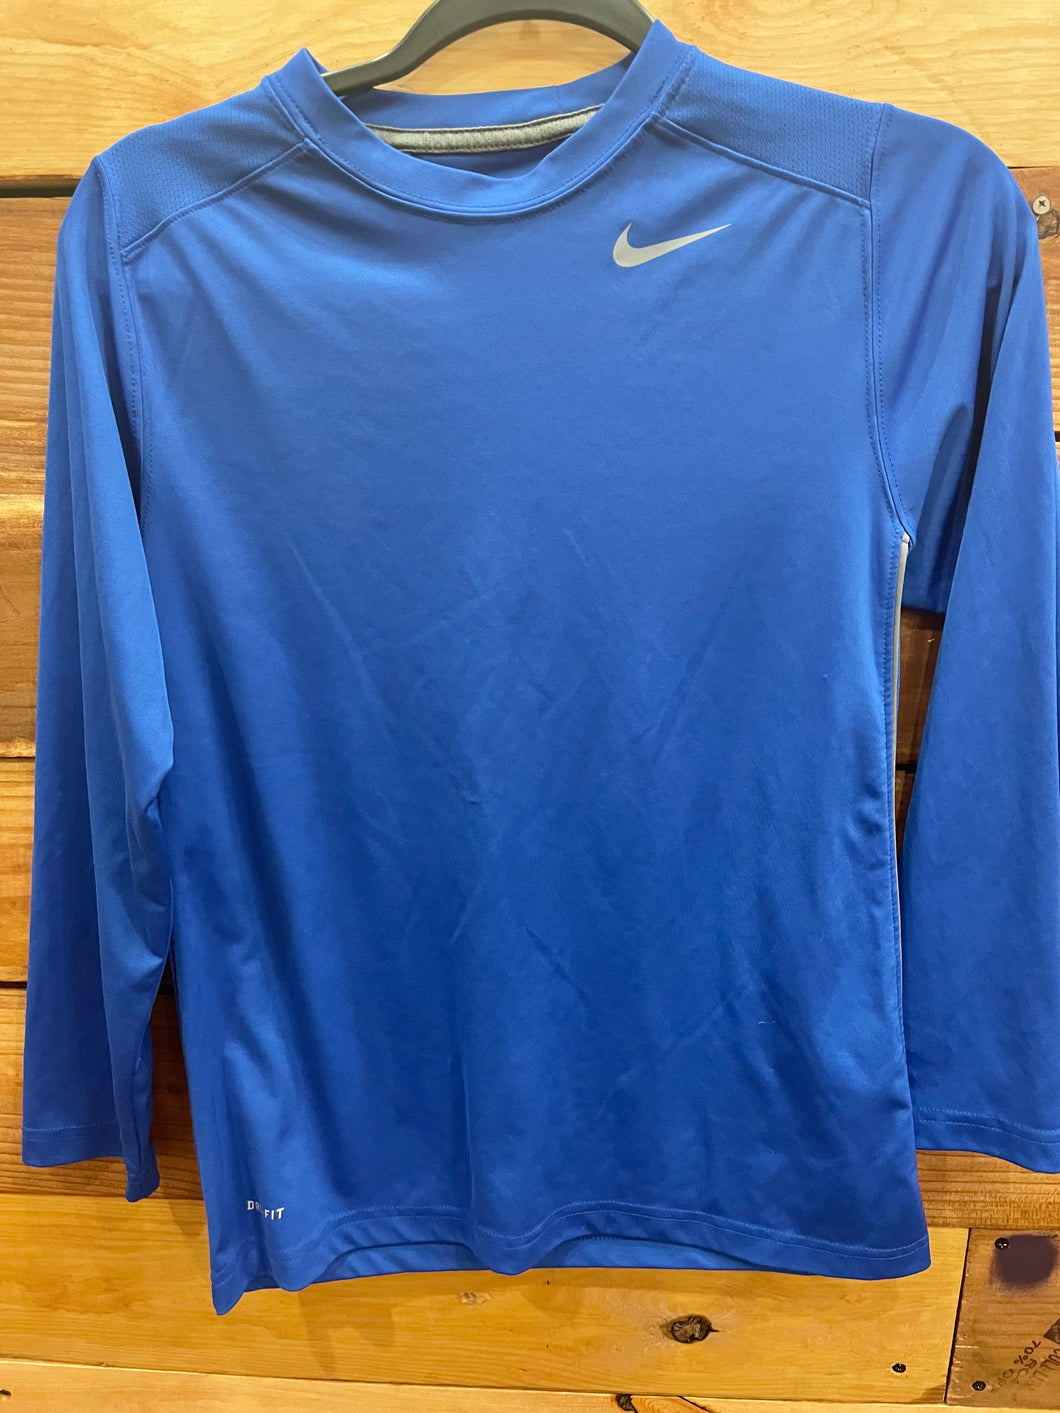 Nike Blue Dri Fit Shirt Size 14-16